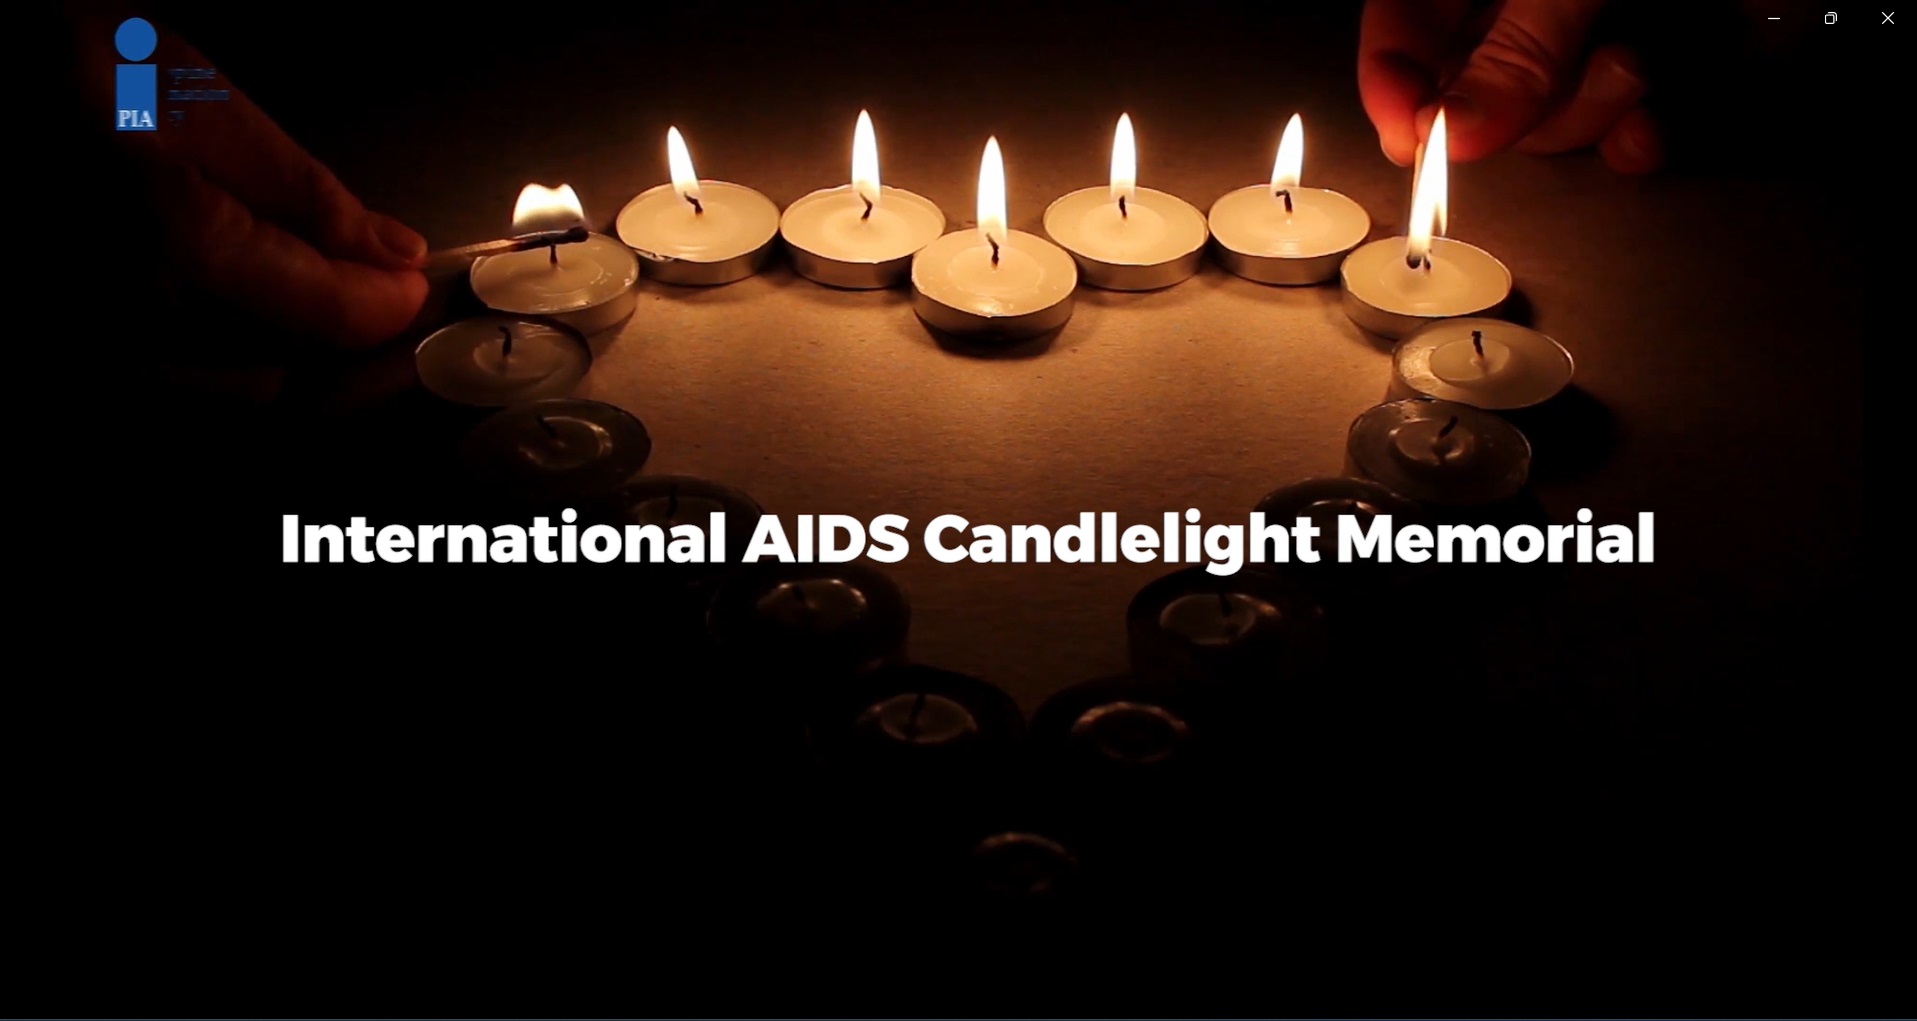 International AIDS Candlelight Memorial Day